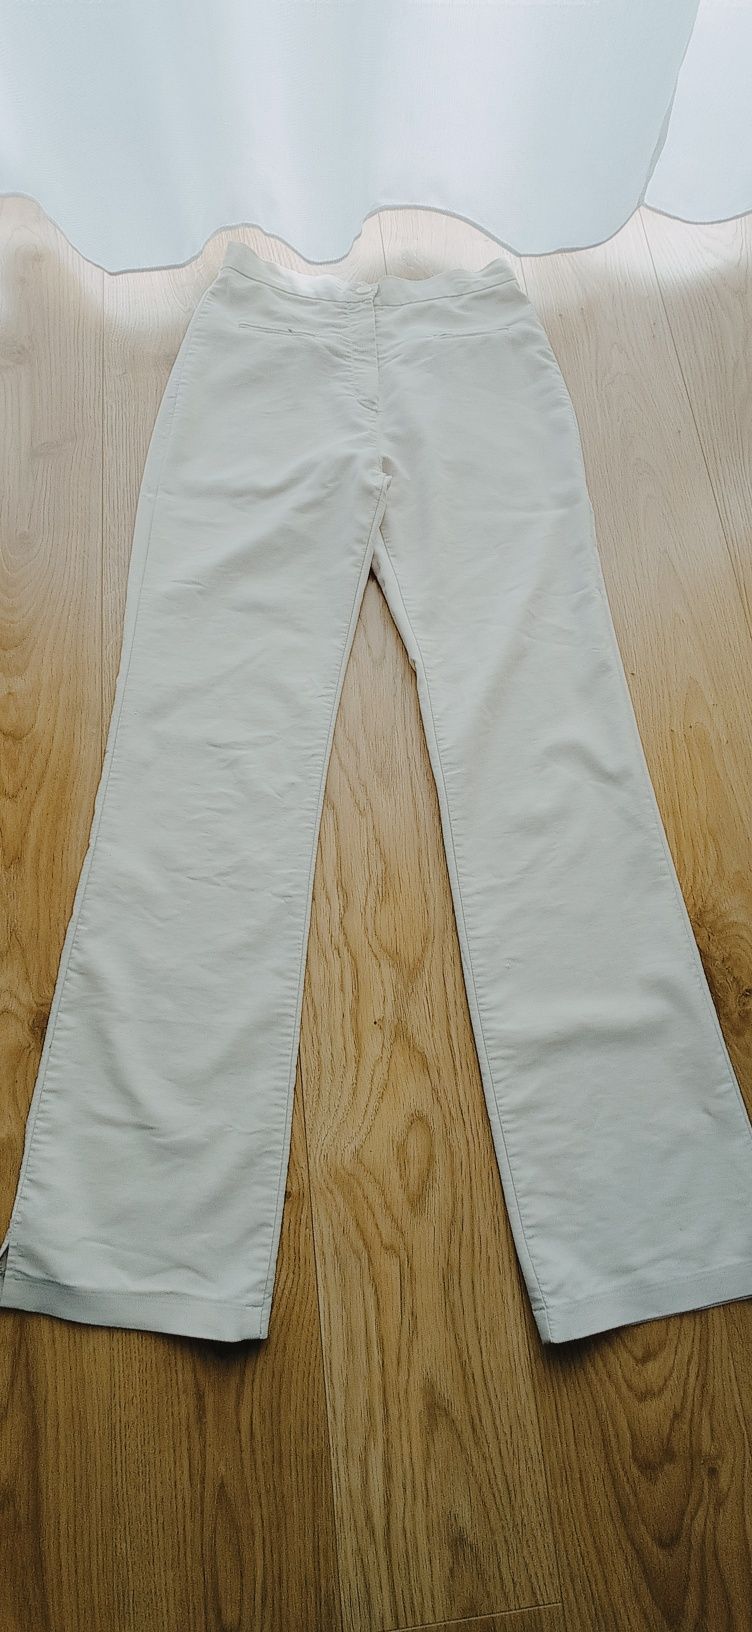 Spodnie materiałowe rozmiar M